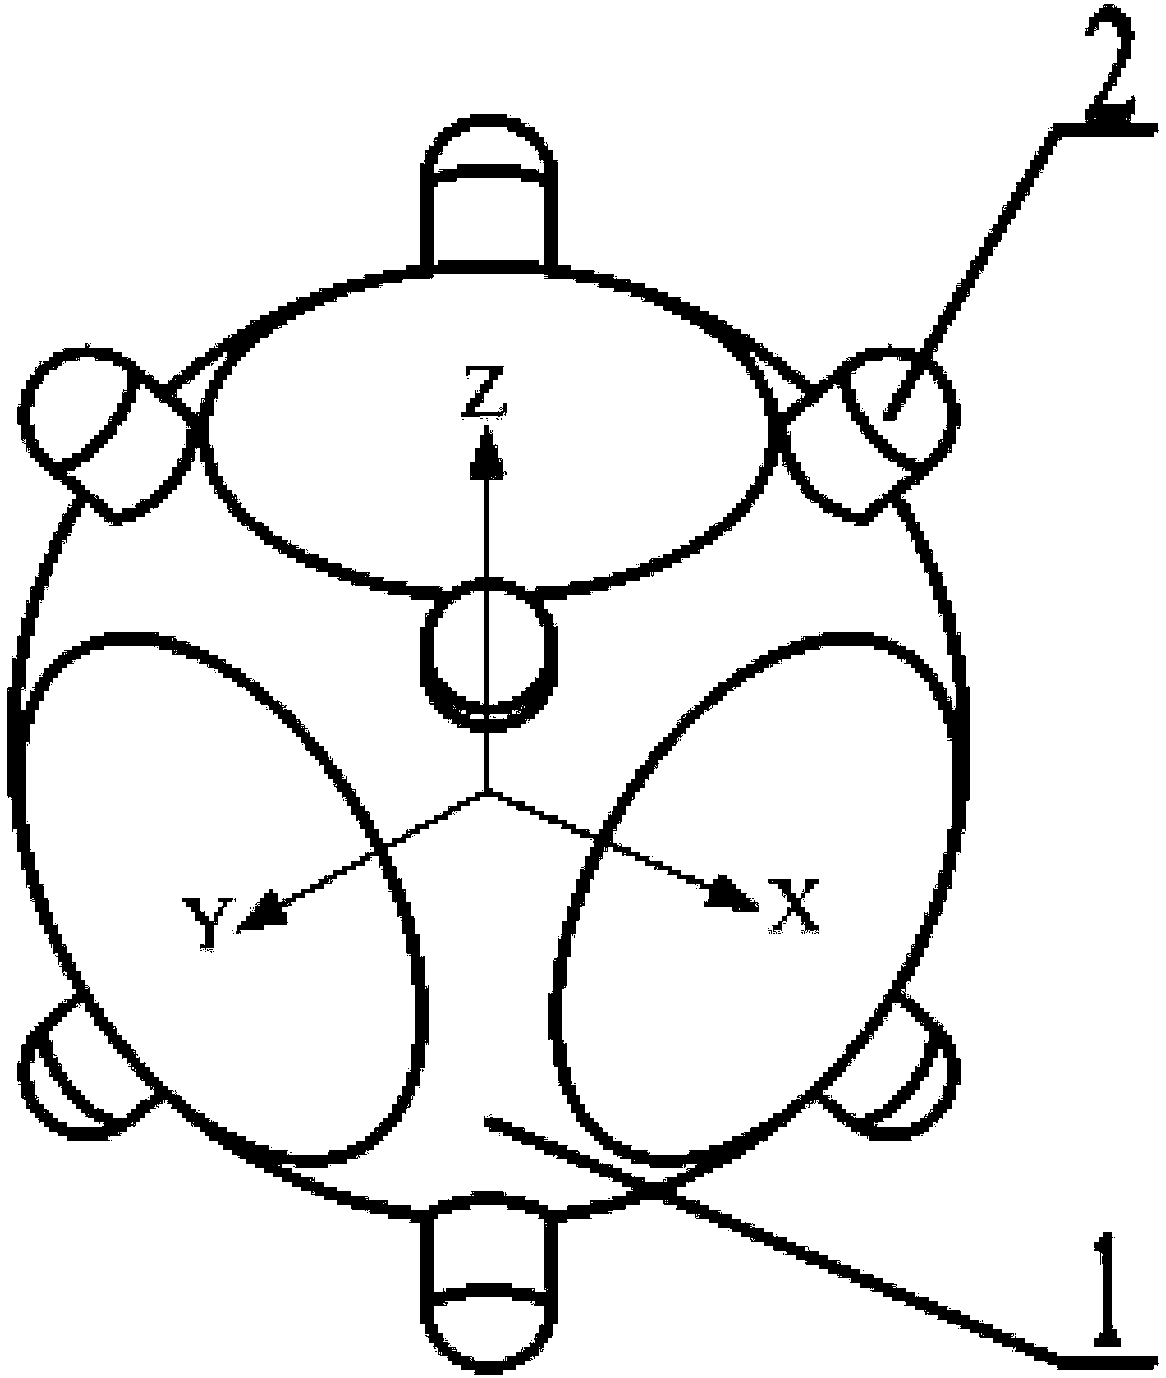 Three-degree-of-freedom spherical stator base body of ultrasonic motor stator and excitation method of stator base body